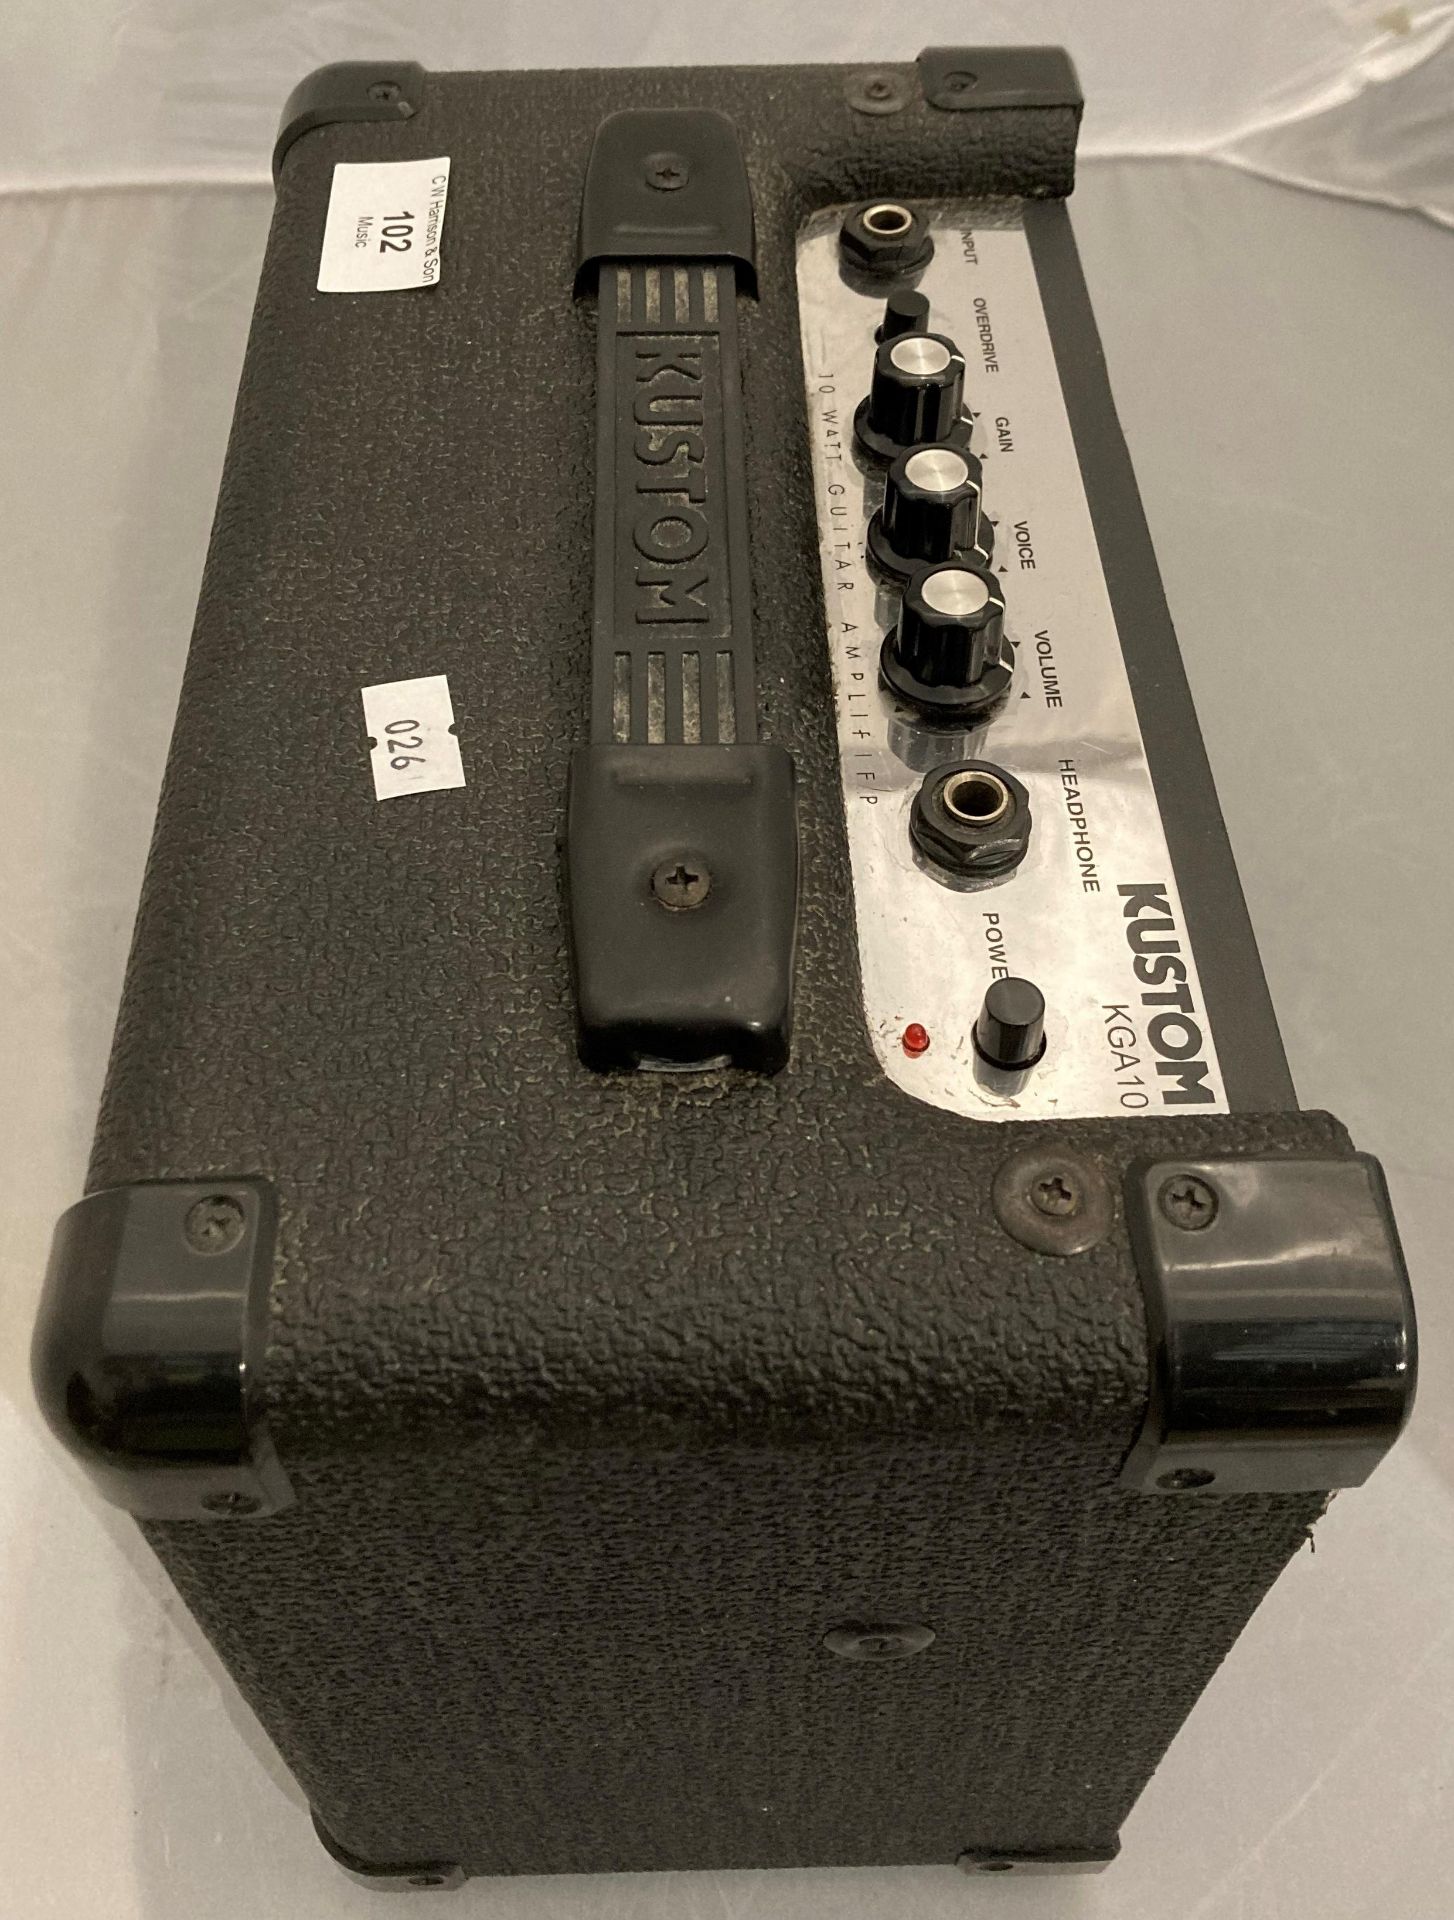 Kustom Lead guitar amplifier, model: KGA10 (no test, - Image 2 of 3